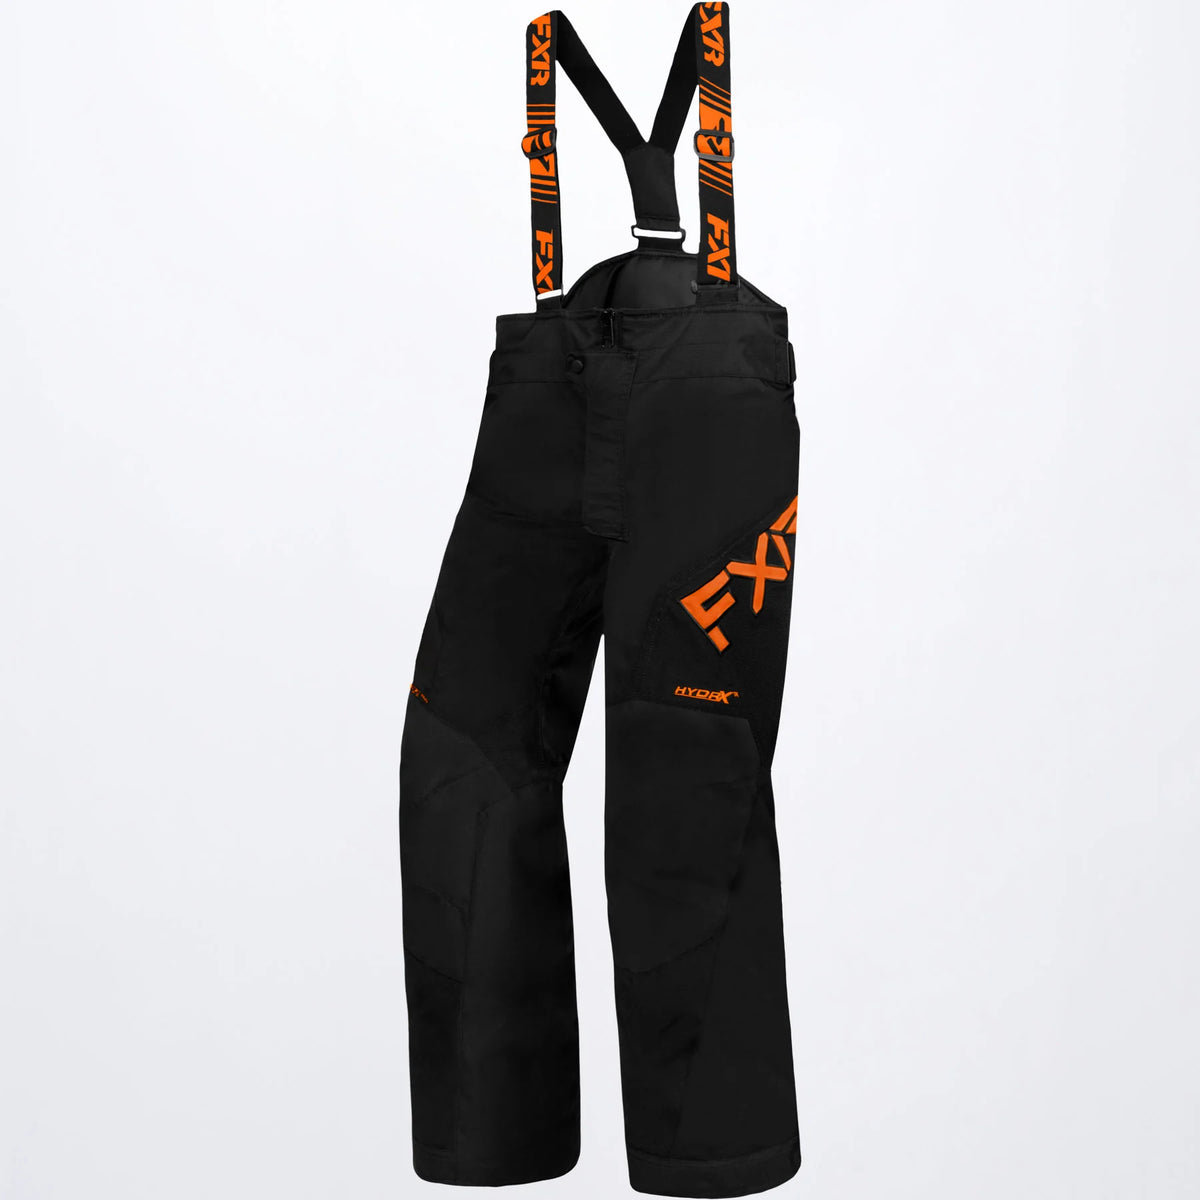 FXR Youth Clutch Pants in Black/Orange for Motocross/ATV Size L /14